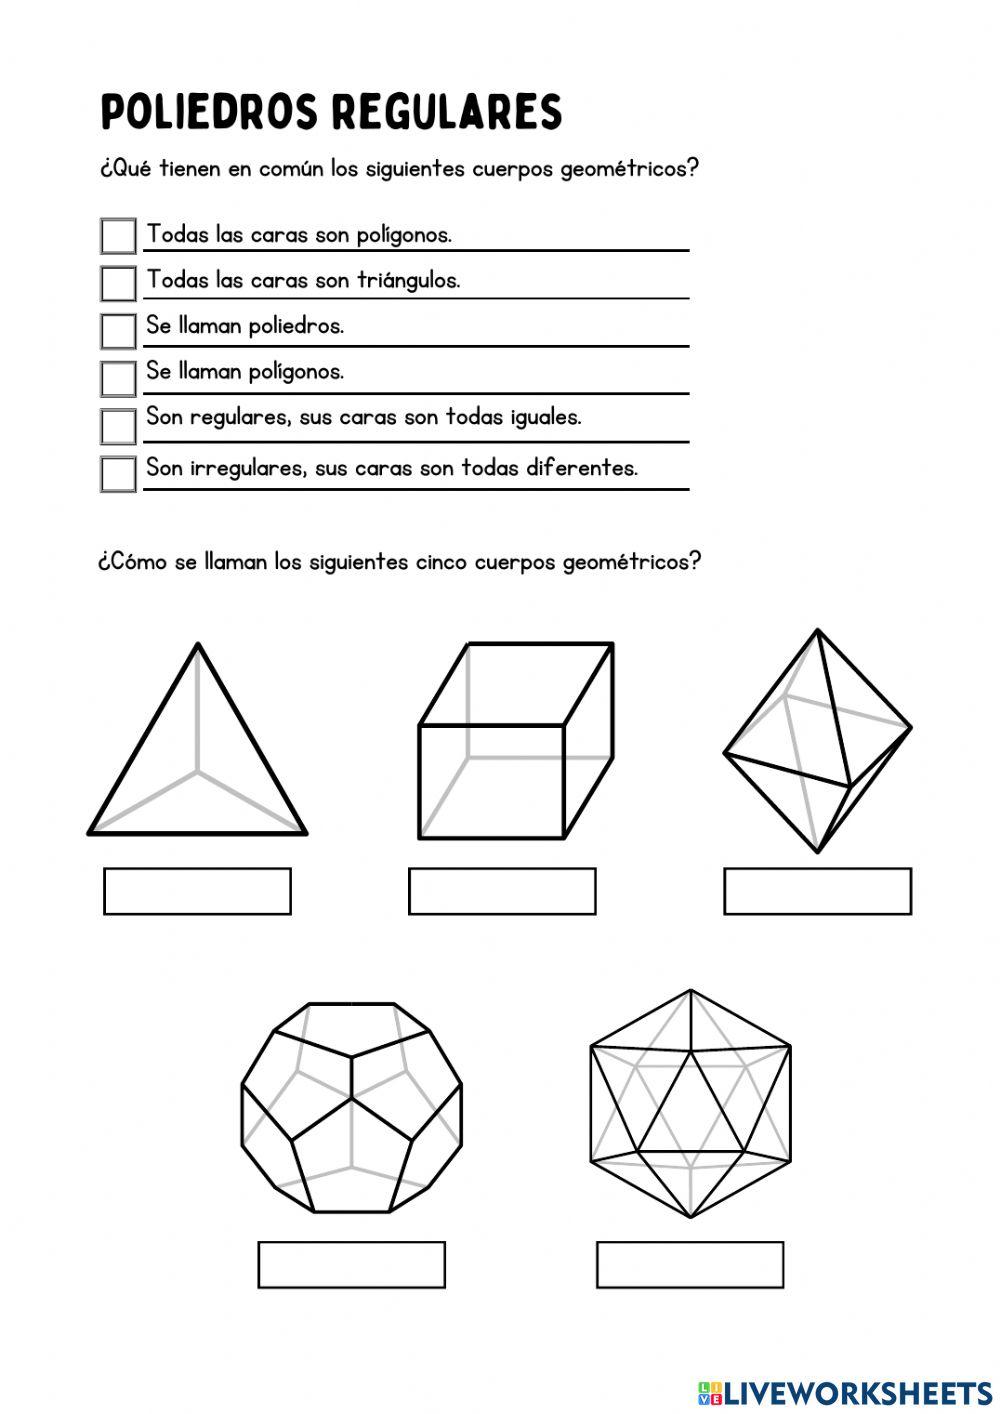 Polígonos regulares online pdf exercise for Cuarto de Primaria | Live ...